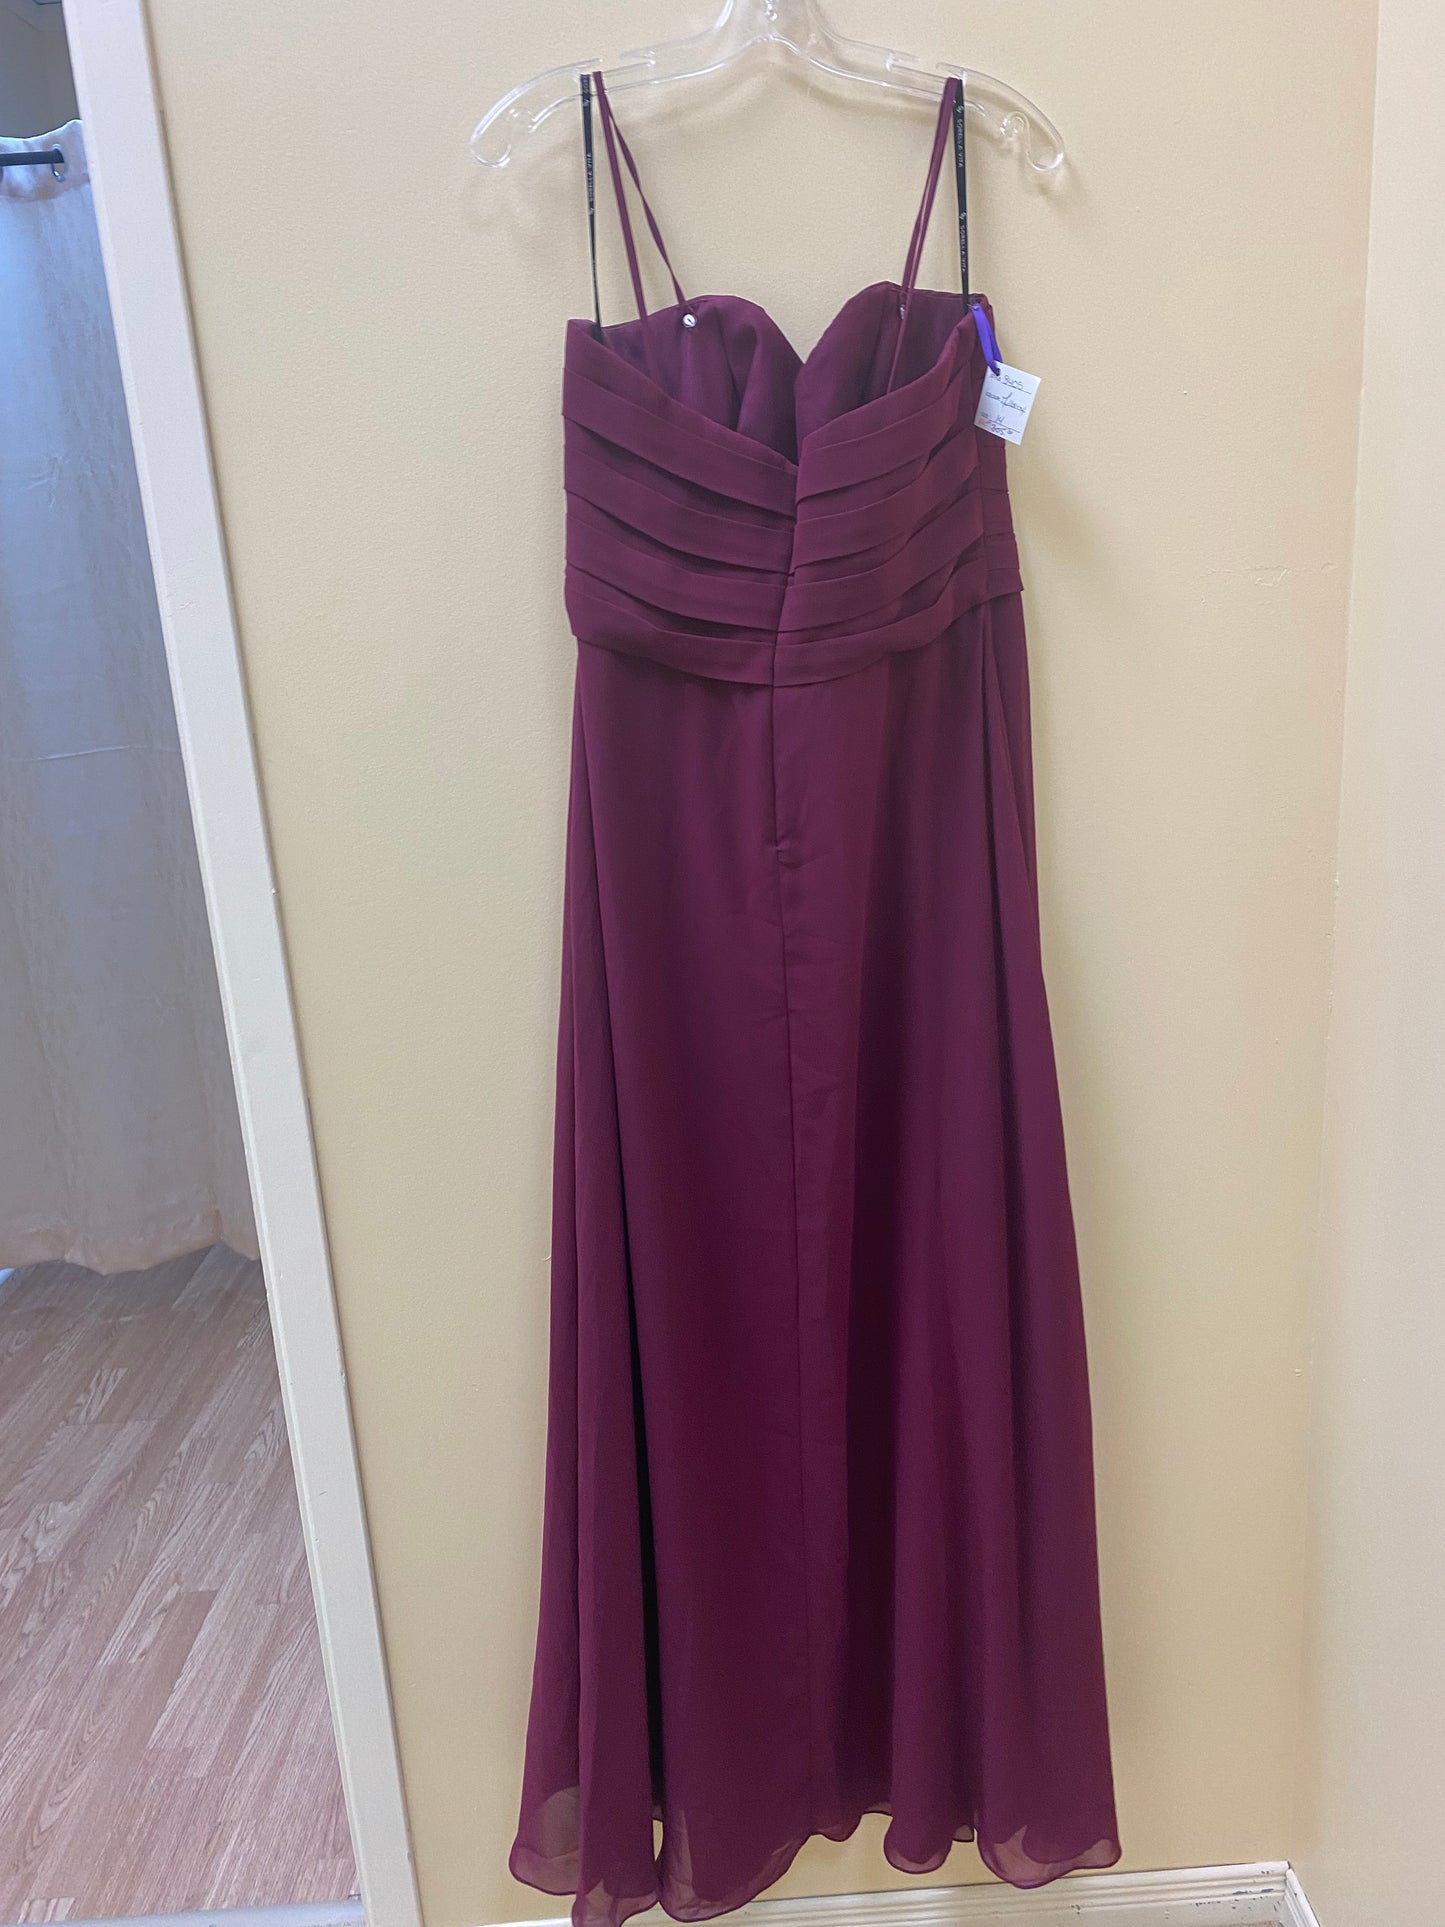 SORELLA VITA - 8405 - Mulberry Size 14 Long Prom / Mother of the Bride / Bridesmaid Dress